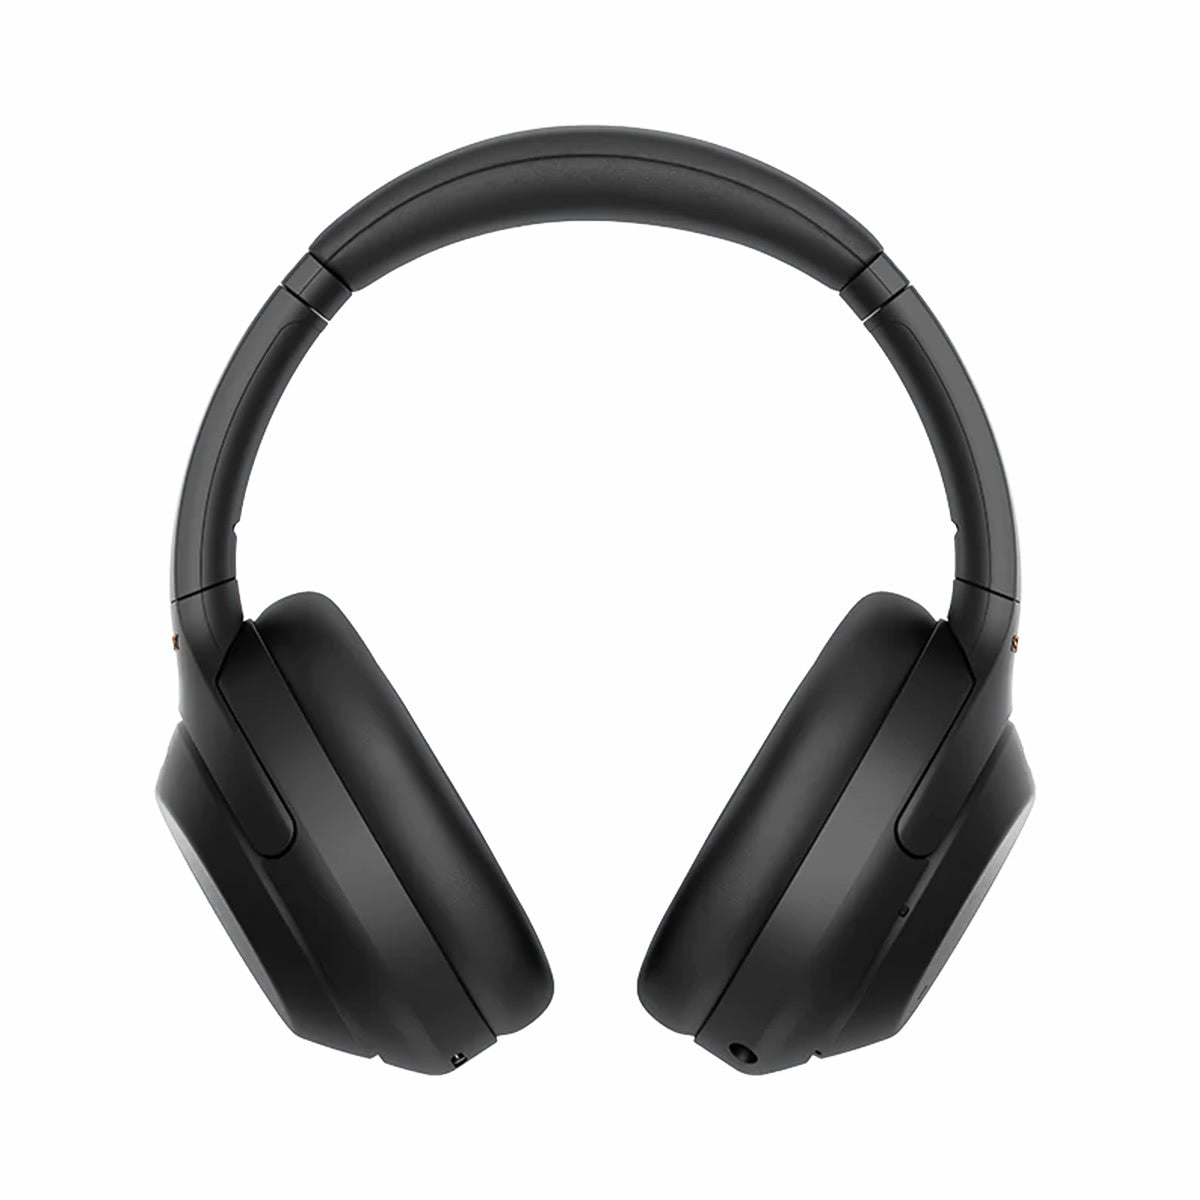 Sony WH-1000XM4 Wireless Noise Canceling Headphones Black